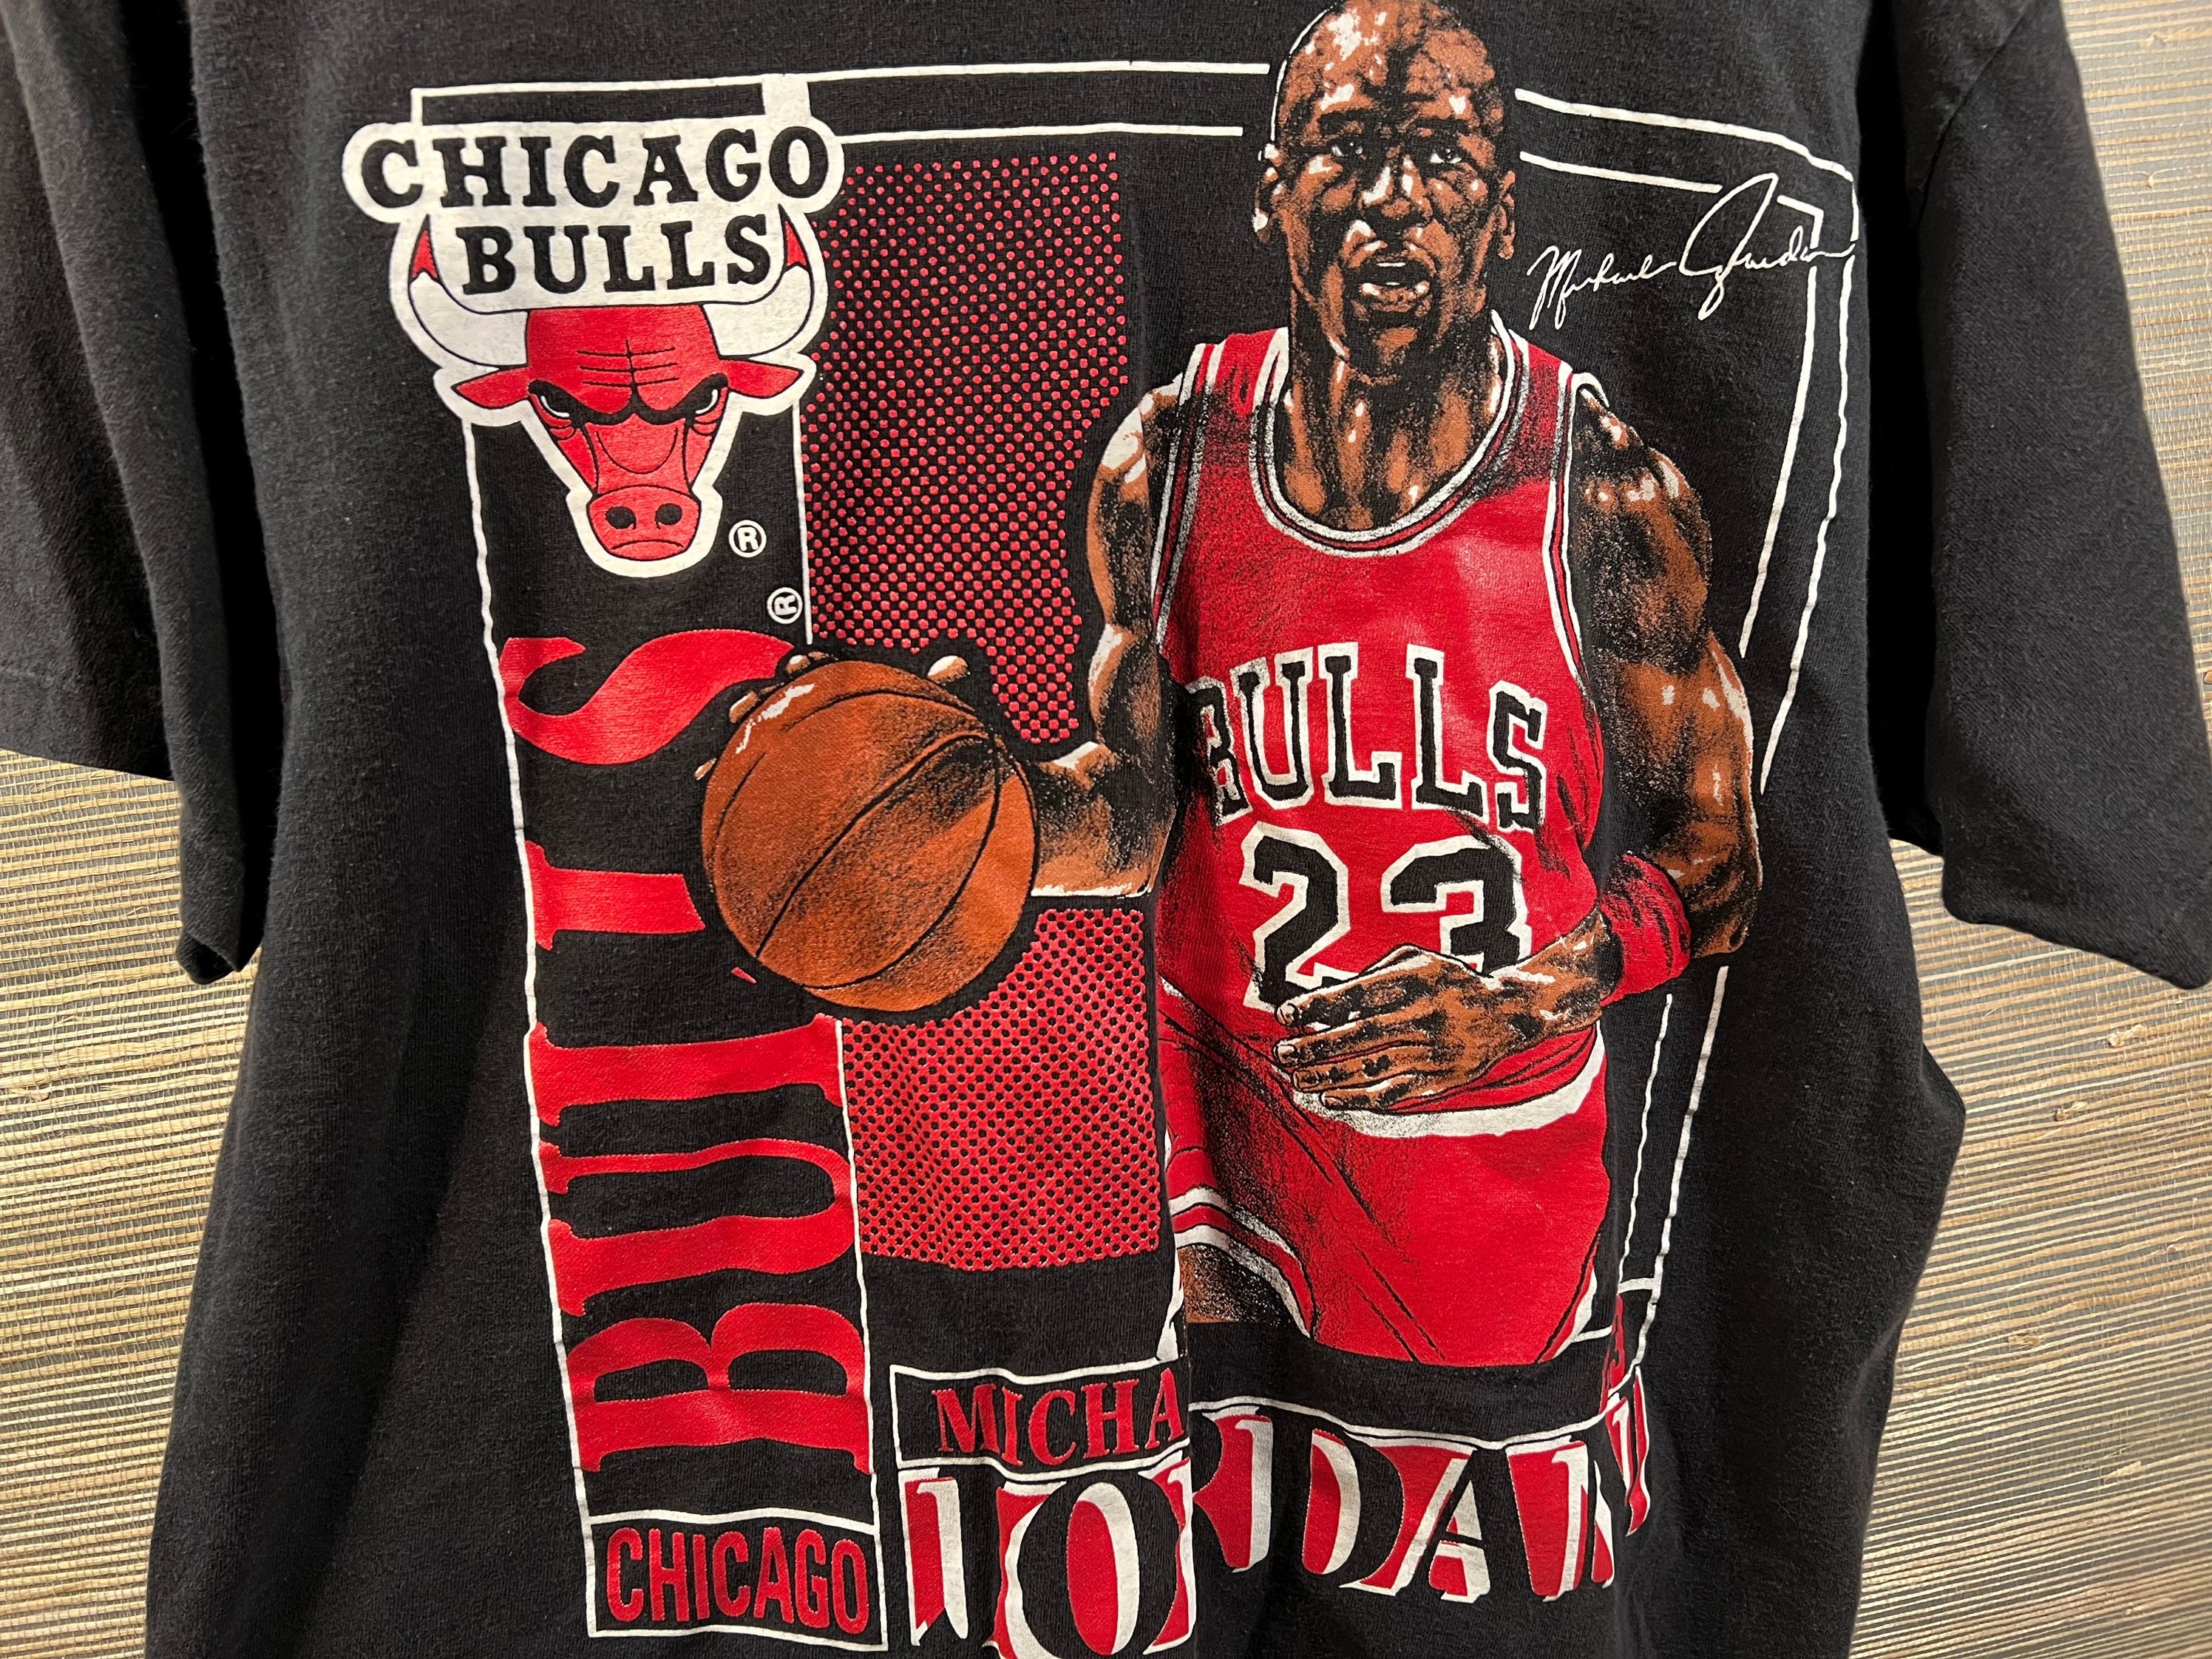 Michael Jordan Basketball Legend Graphic T-Shirt Dress for Sale